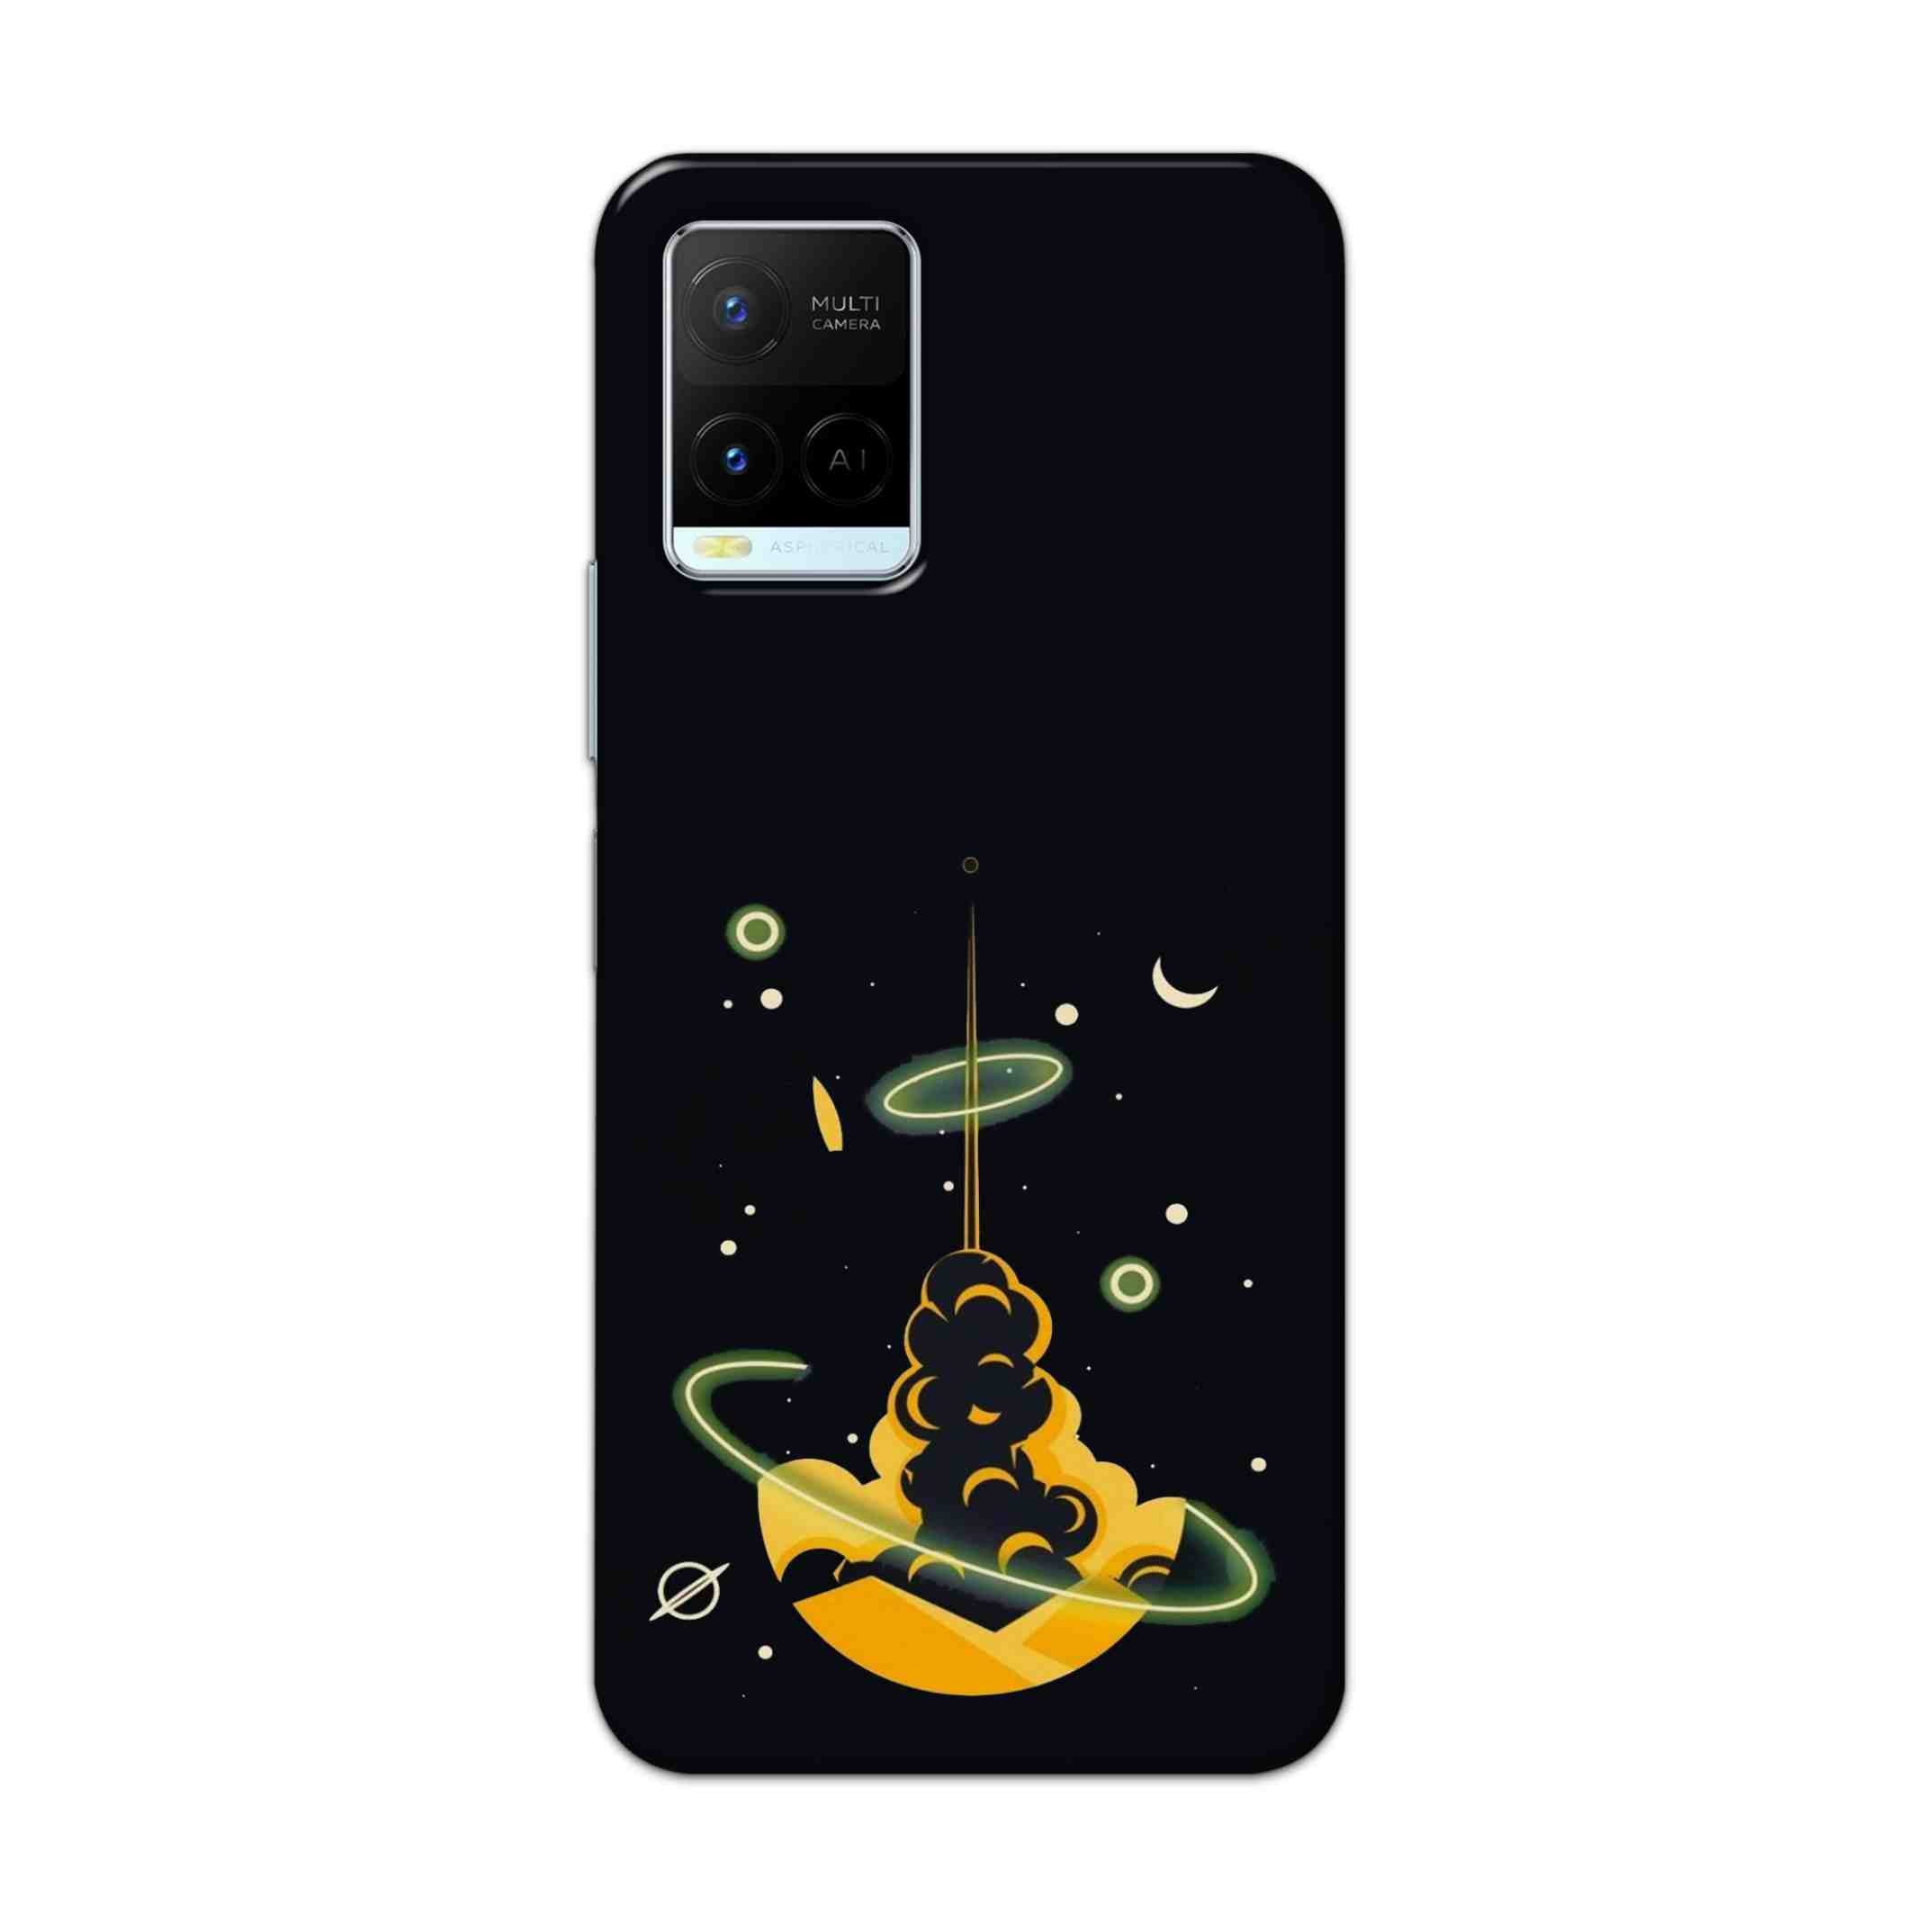 Buy Moon Hard Back Mobile Phone Case Cover For Vivo Y21 2021 Online